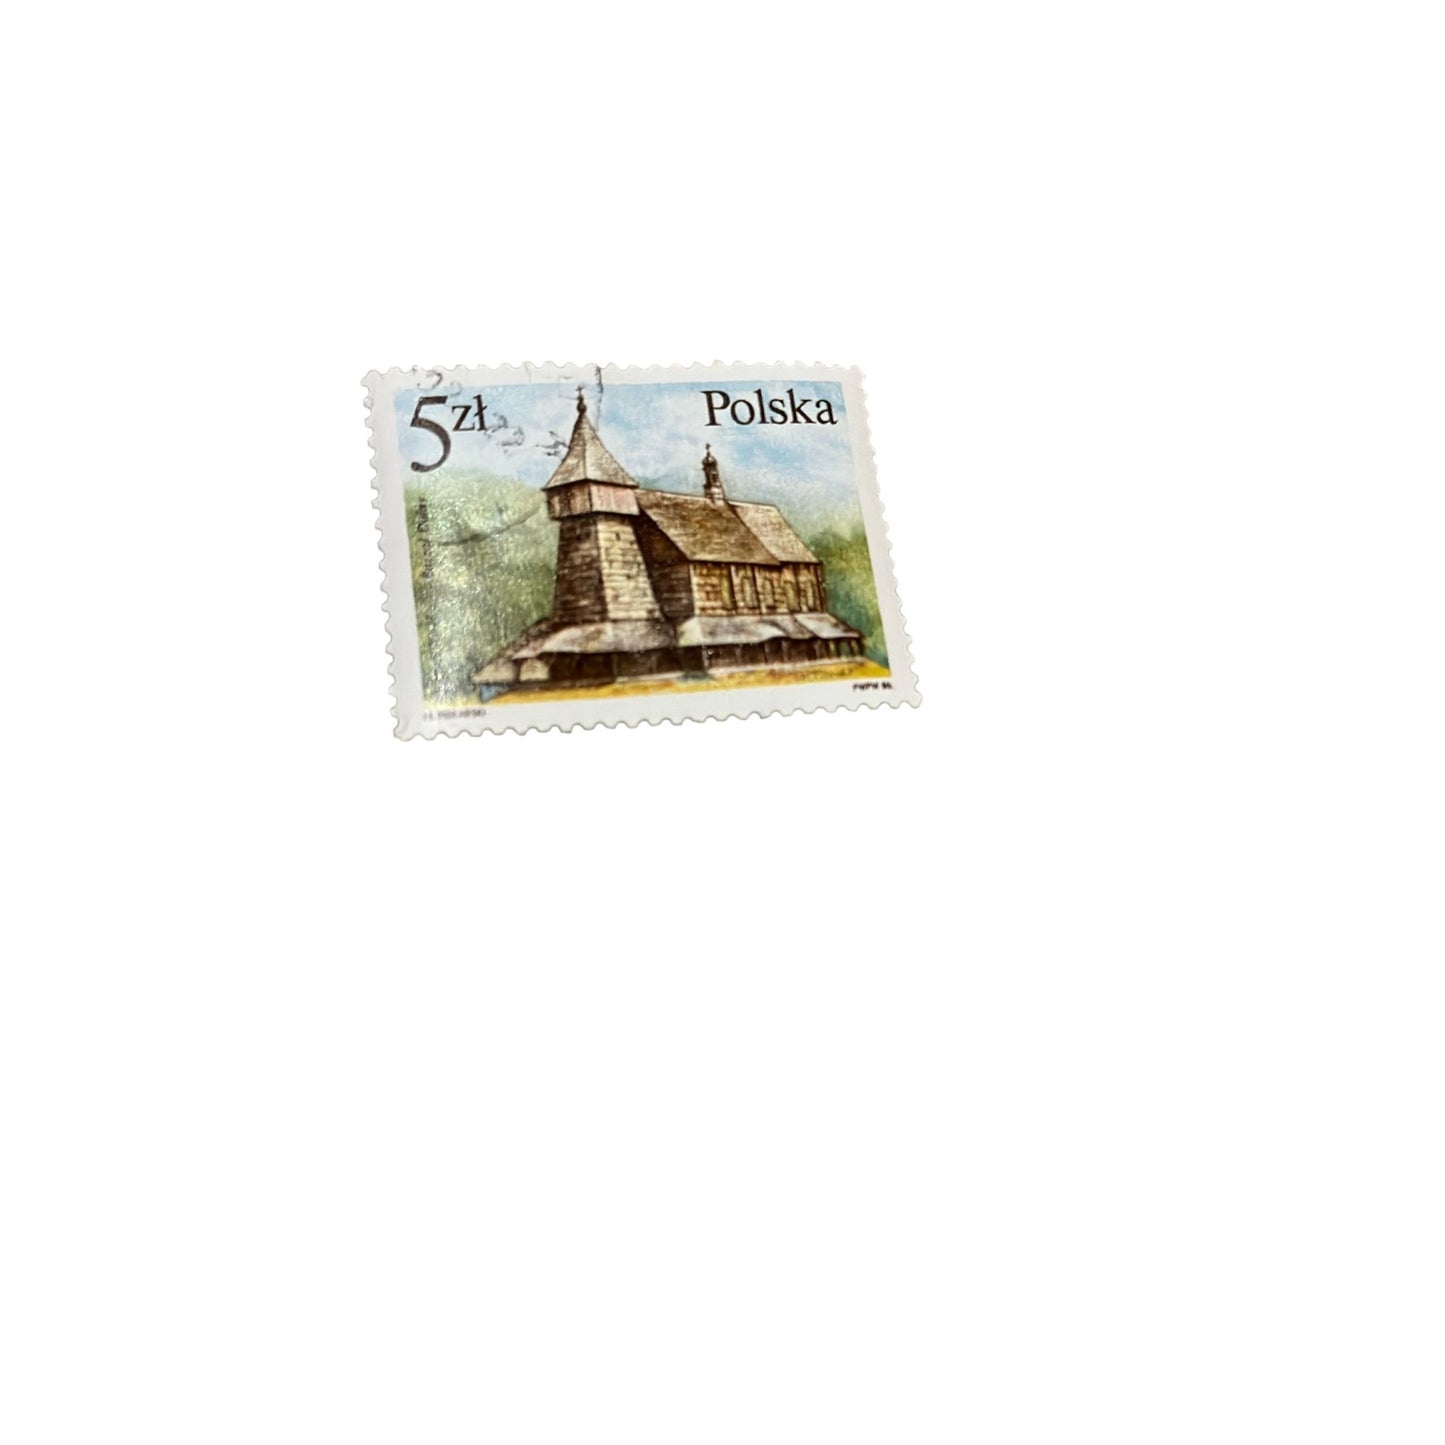 Vintage Polska Stamp Collection 22pcs Historic Gems Perfect for Philatelists